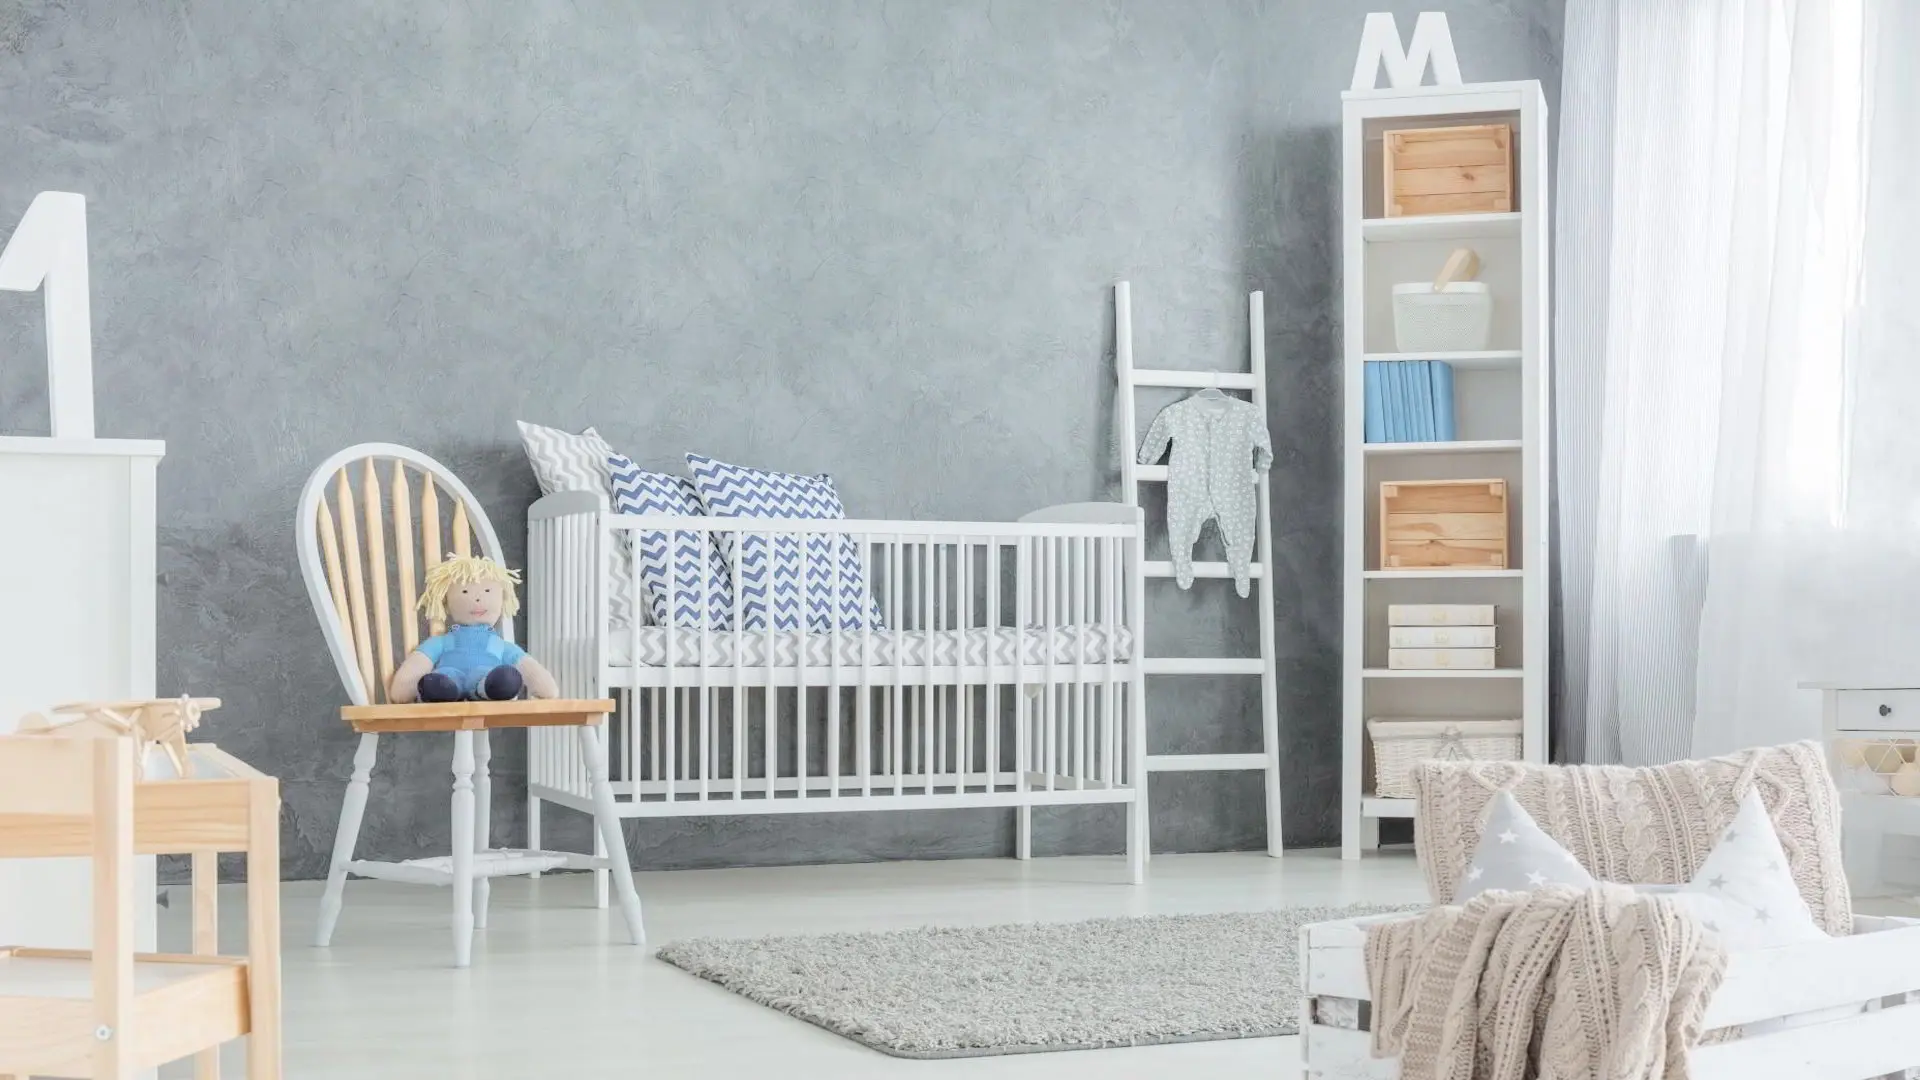 Luksus barnerom med mikrosement i grå farge